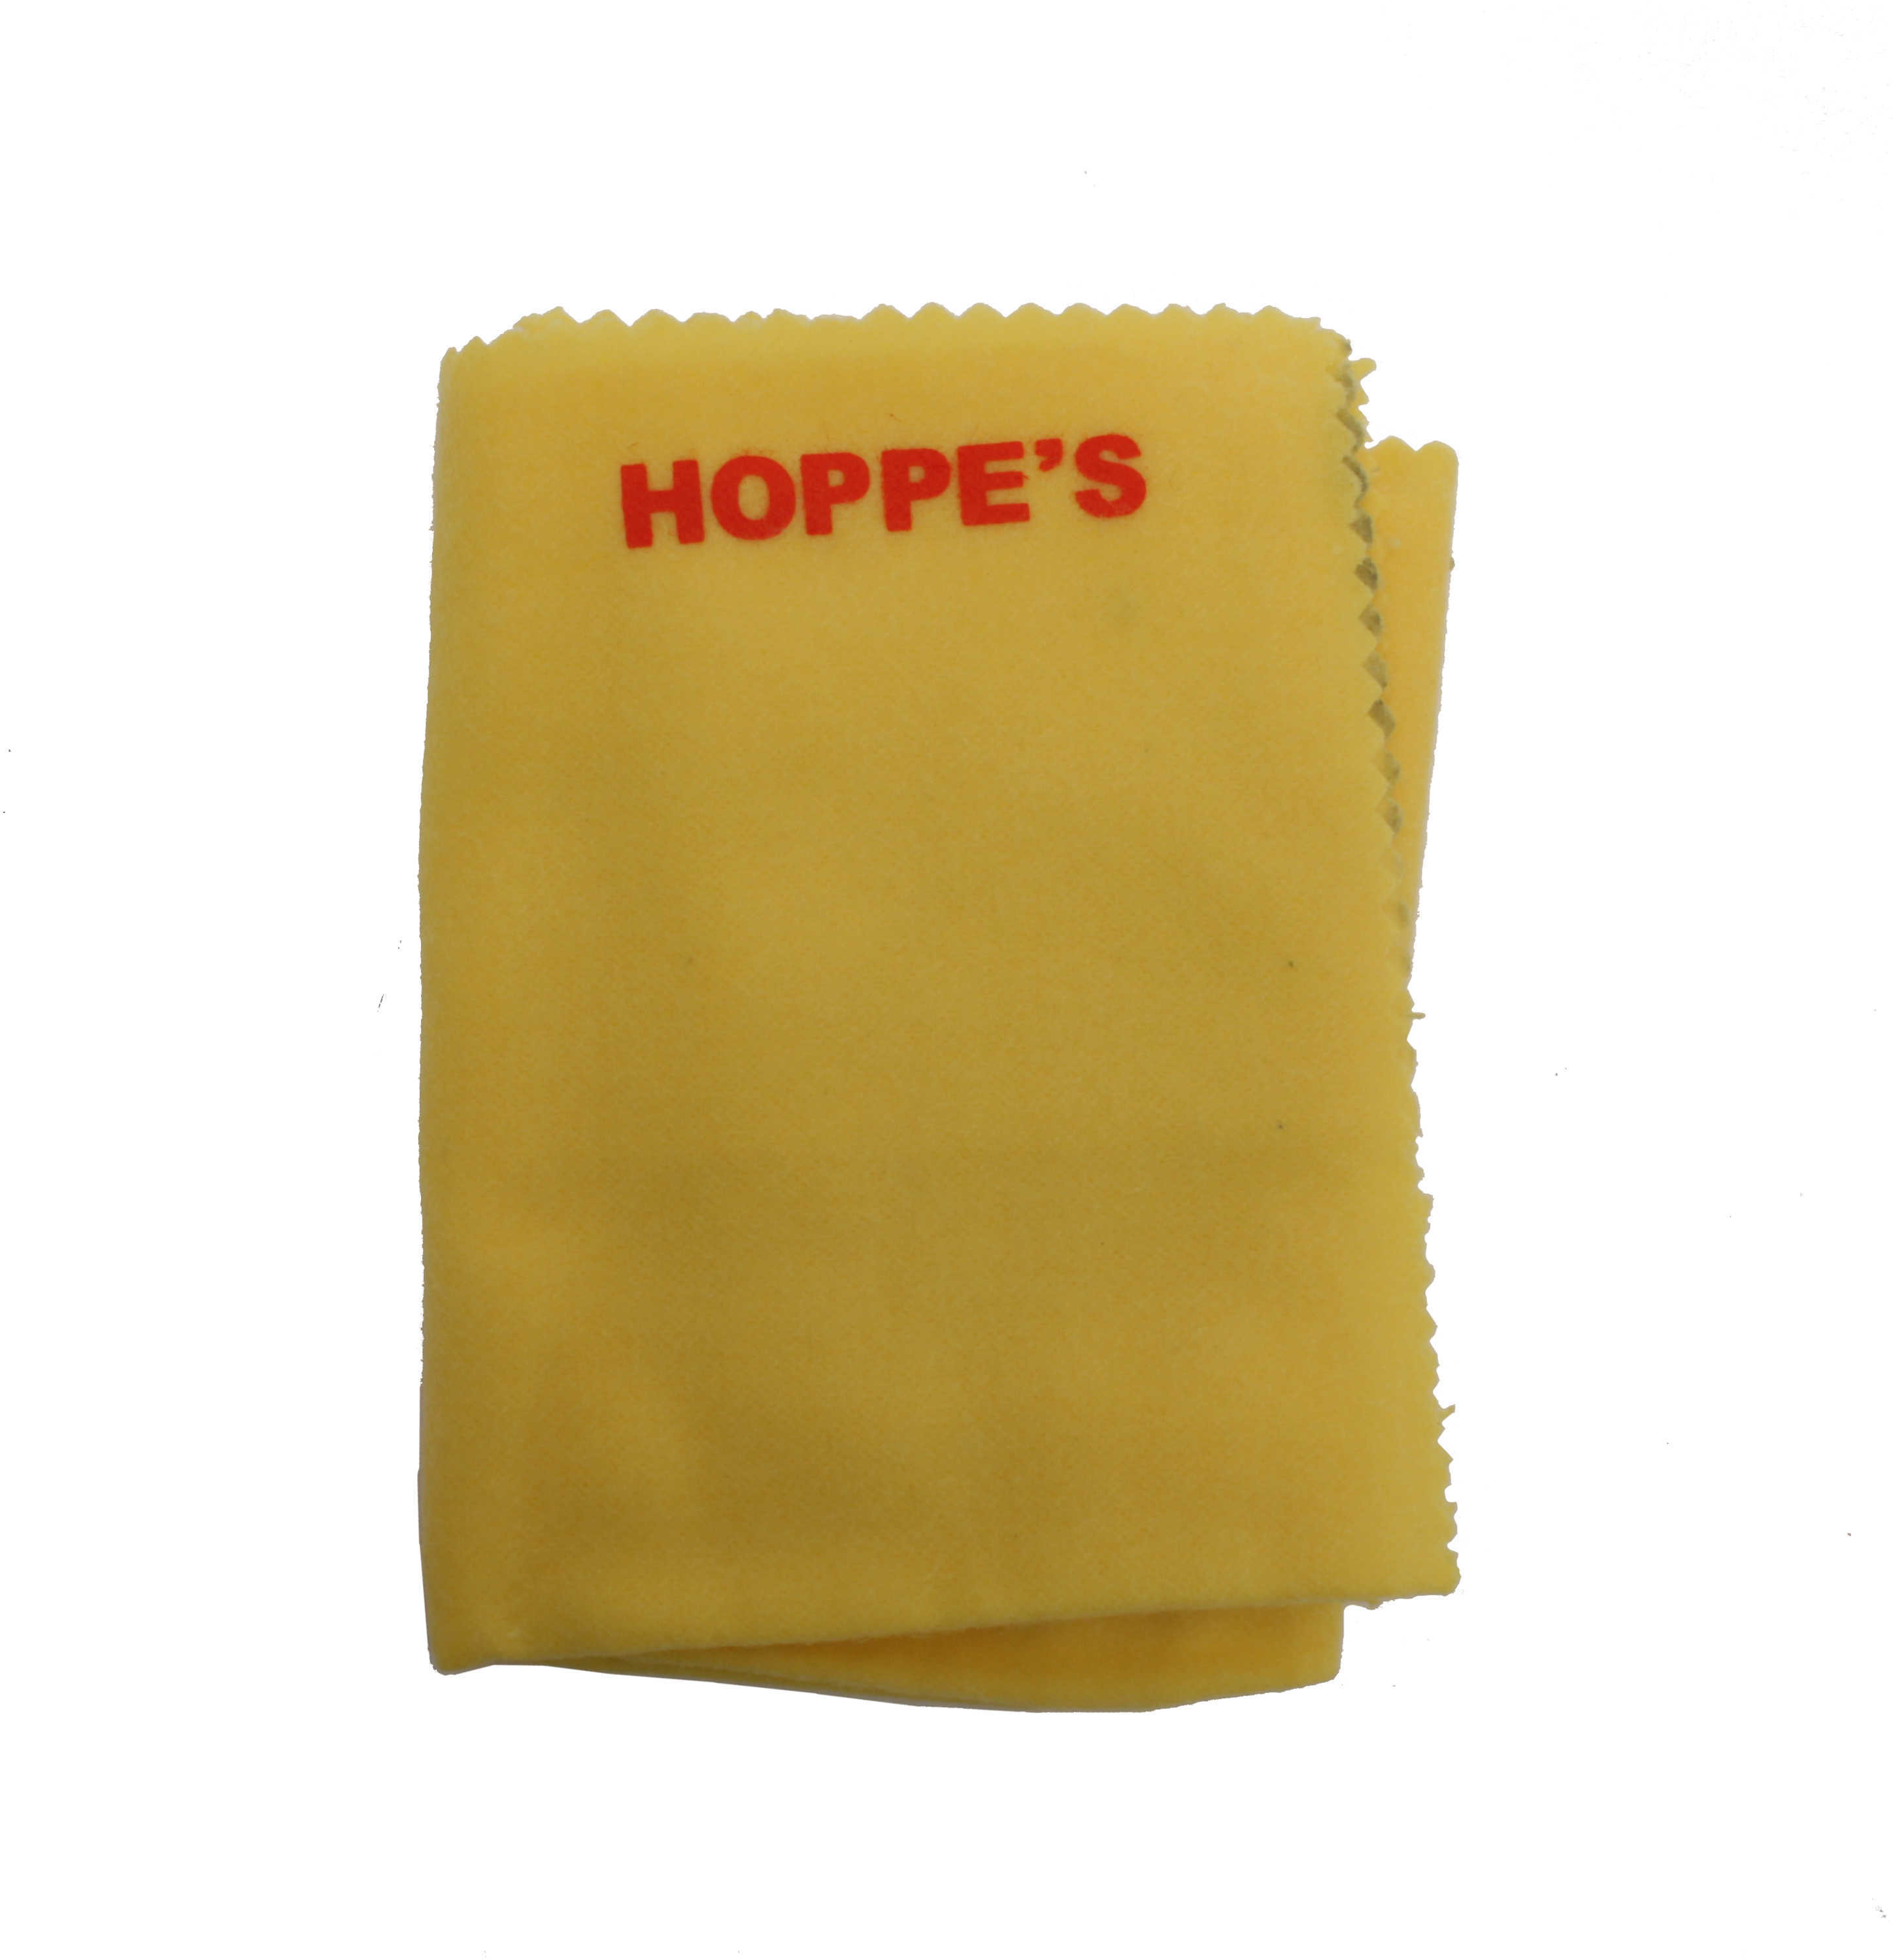 Hoppes Wax Treated Cloth For Wood Stocks